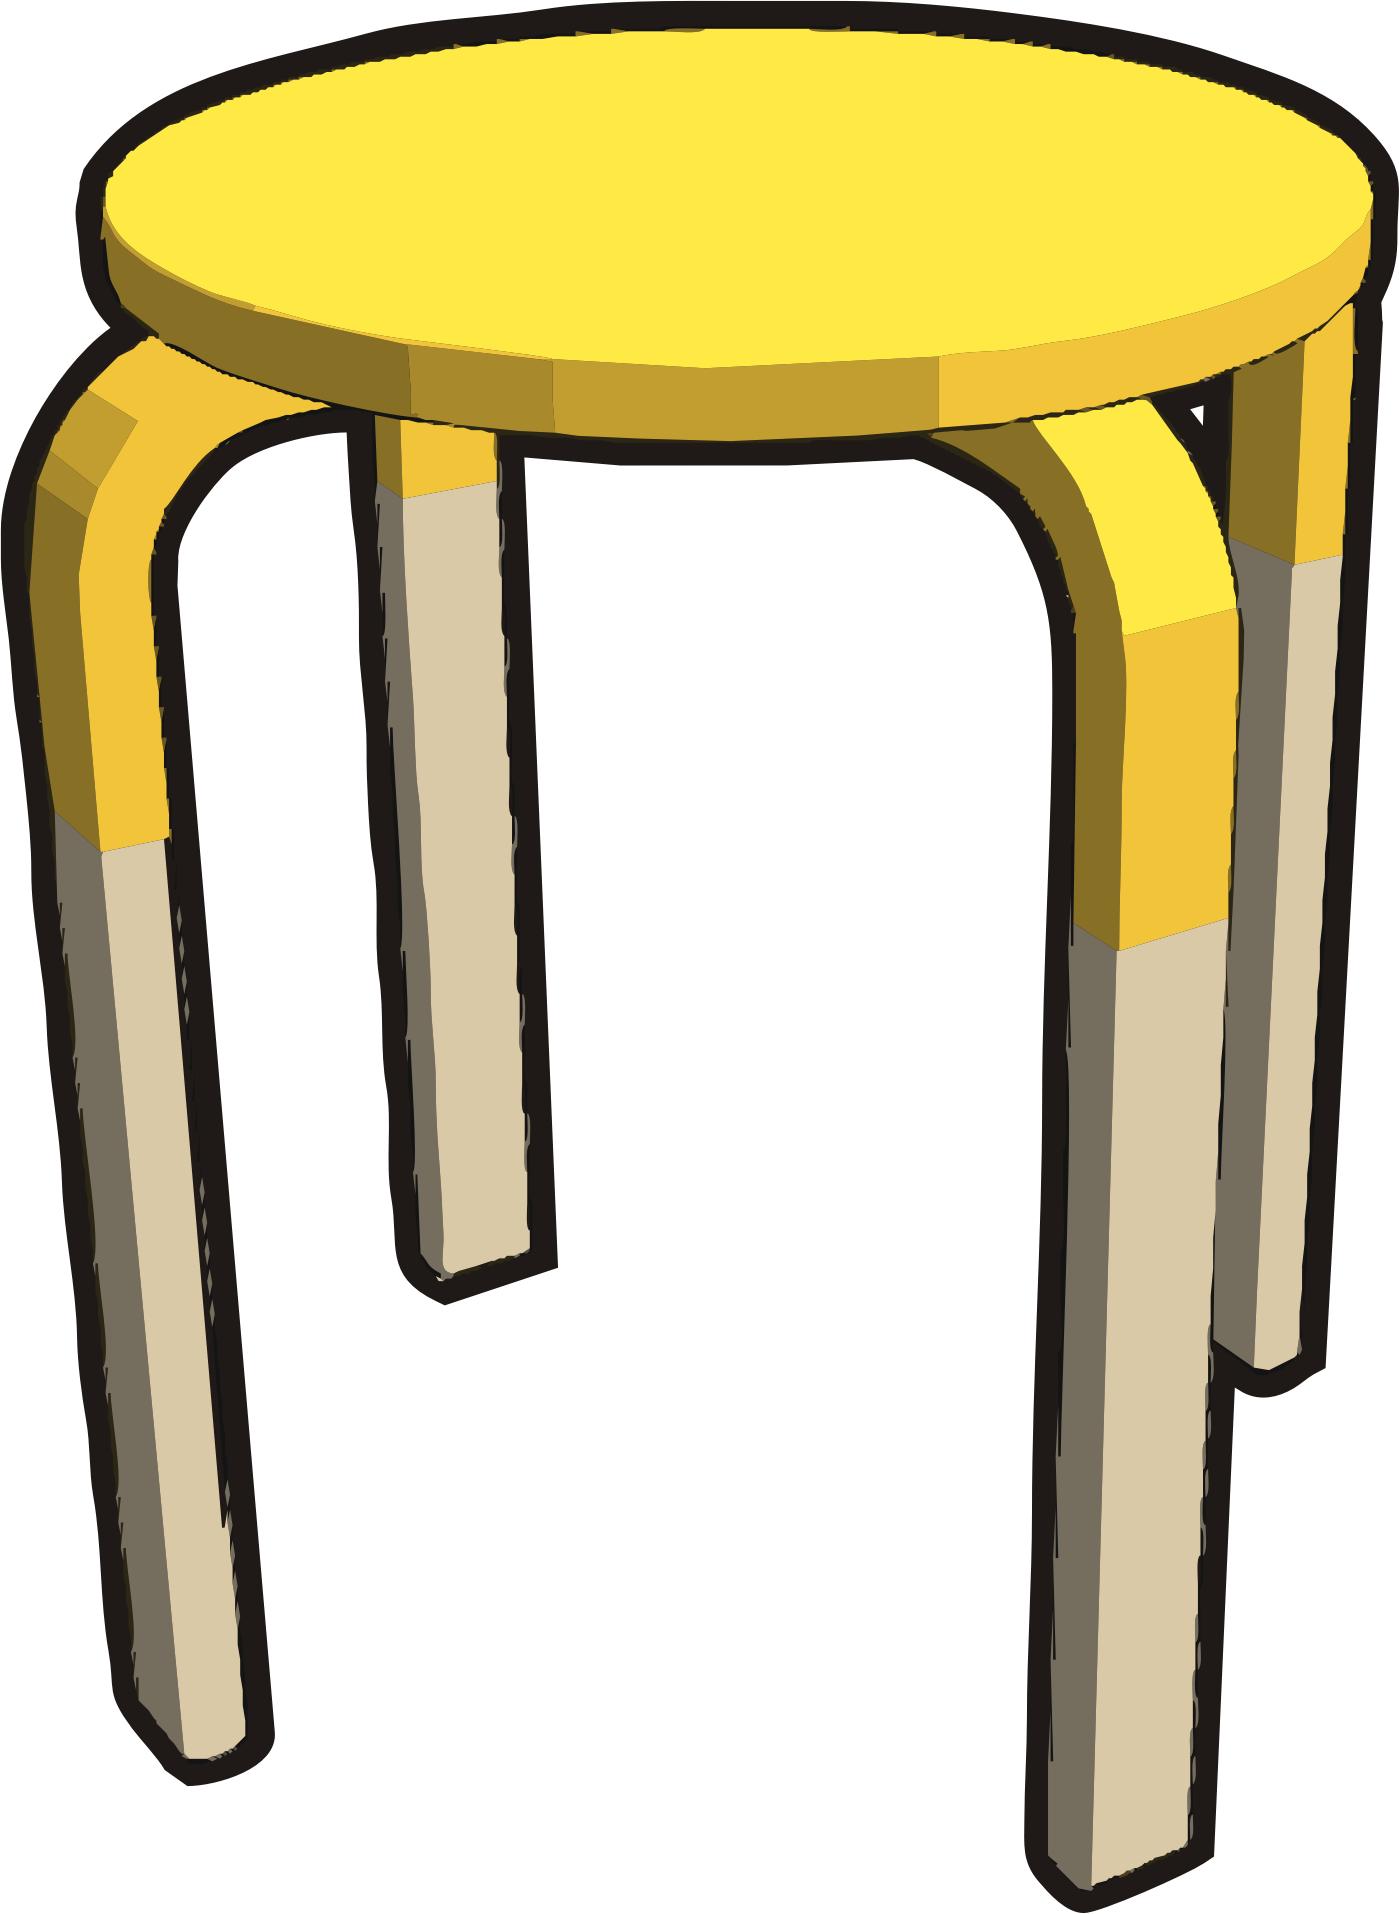 Ikea stuff - Frosta stool, half yellow png